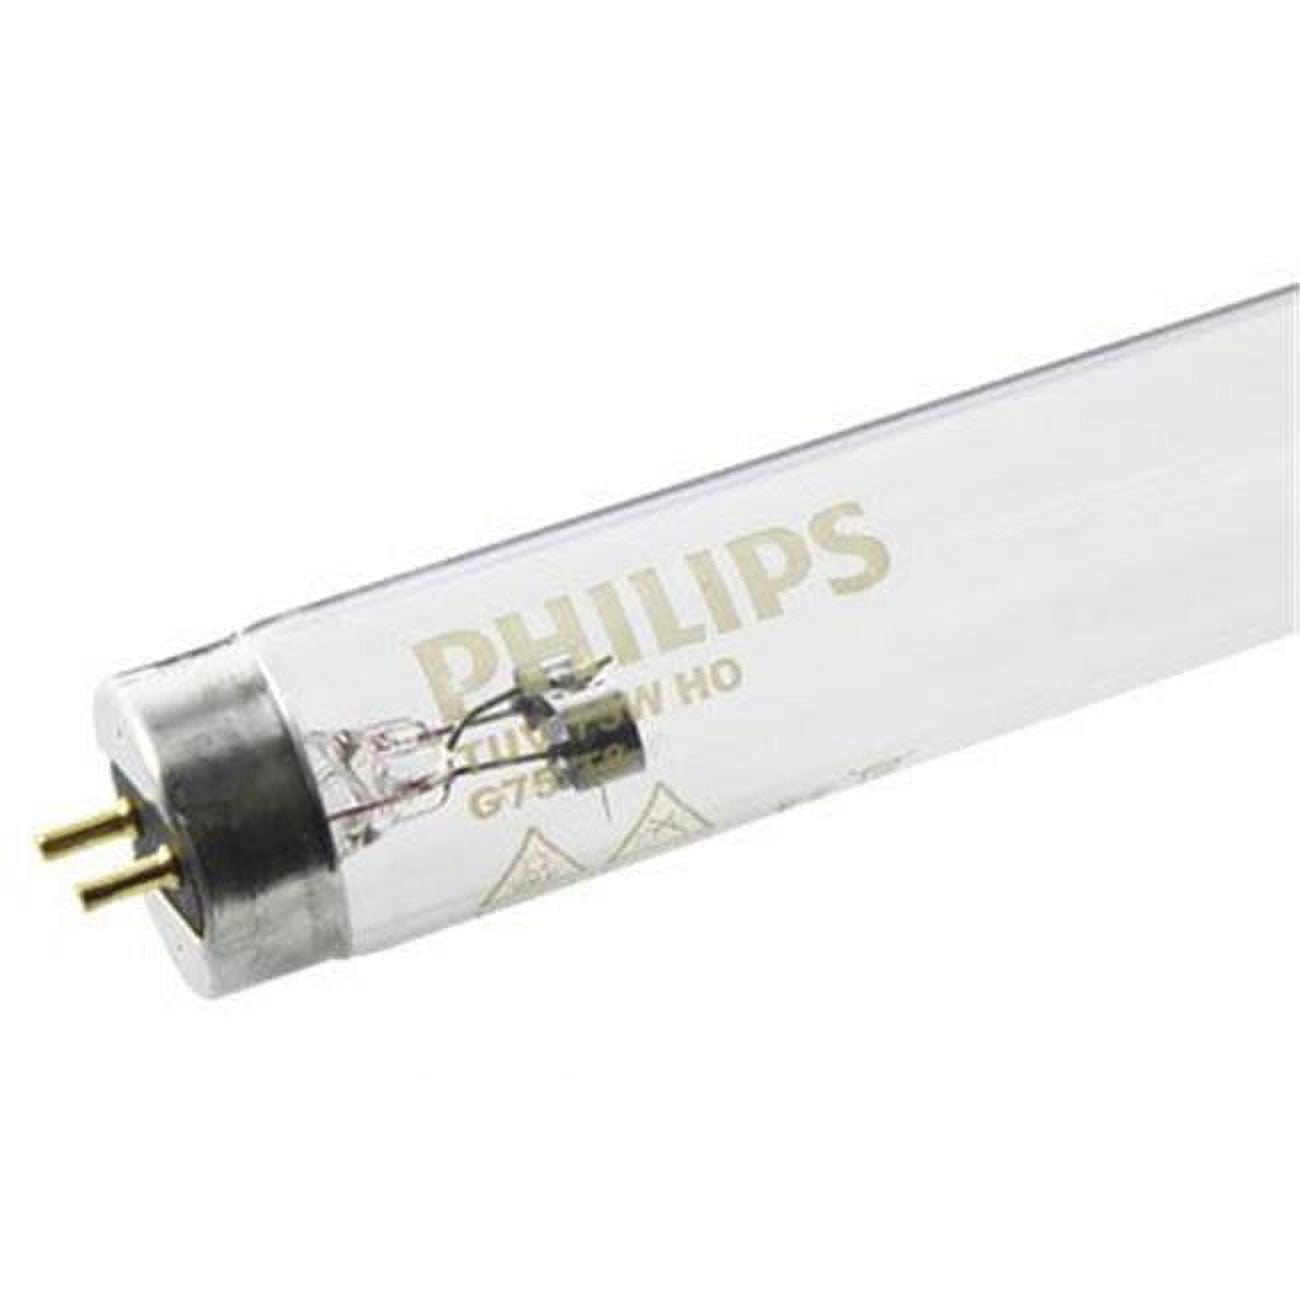 Dny-170250 T8 Tuv 75w Ho Germicidal Light Bulb